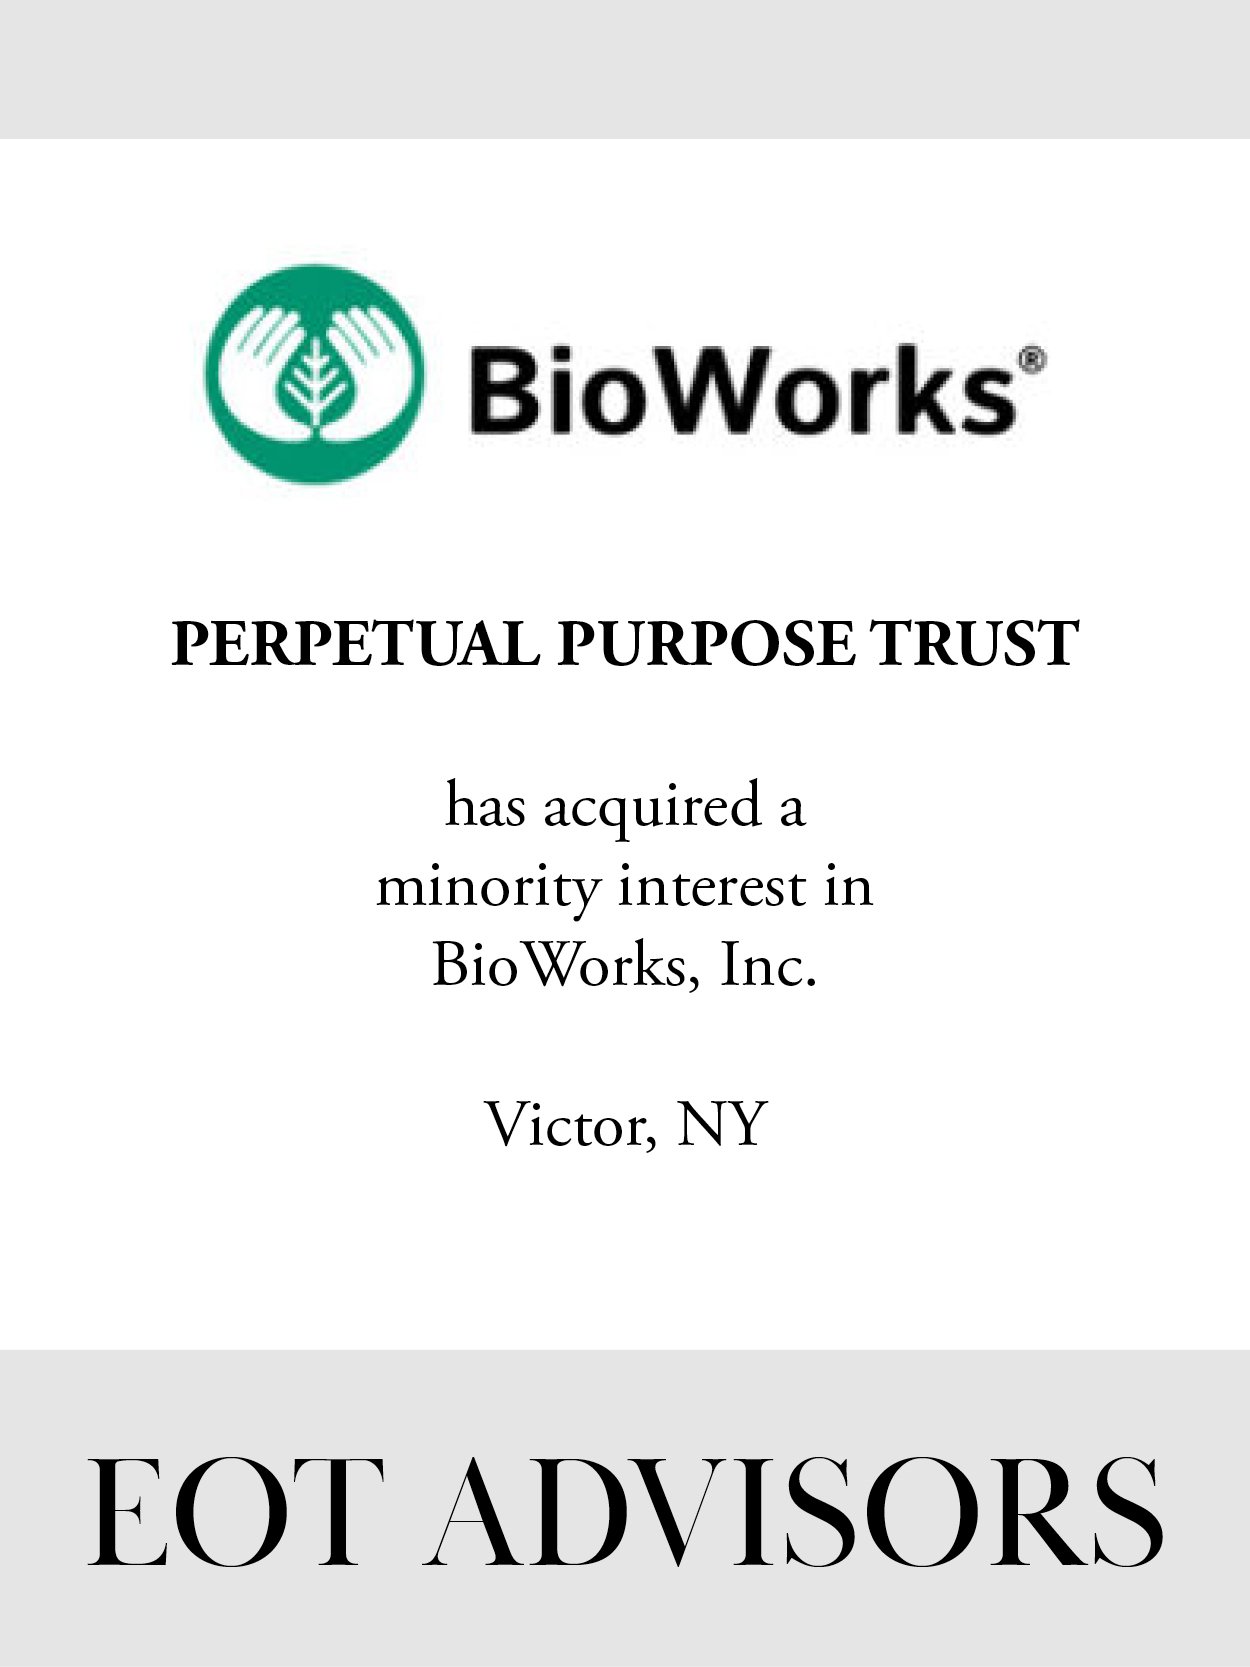 BioWorks